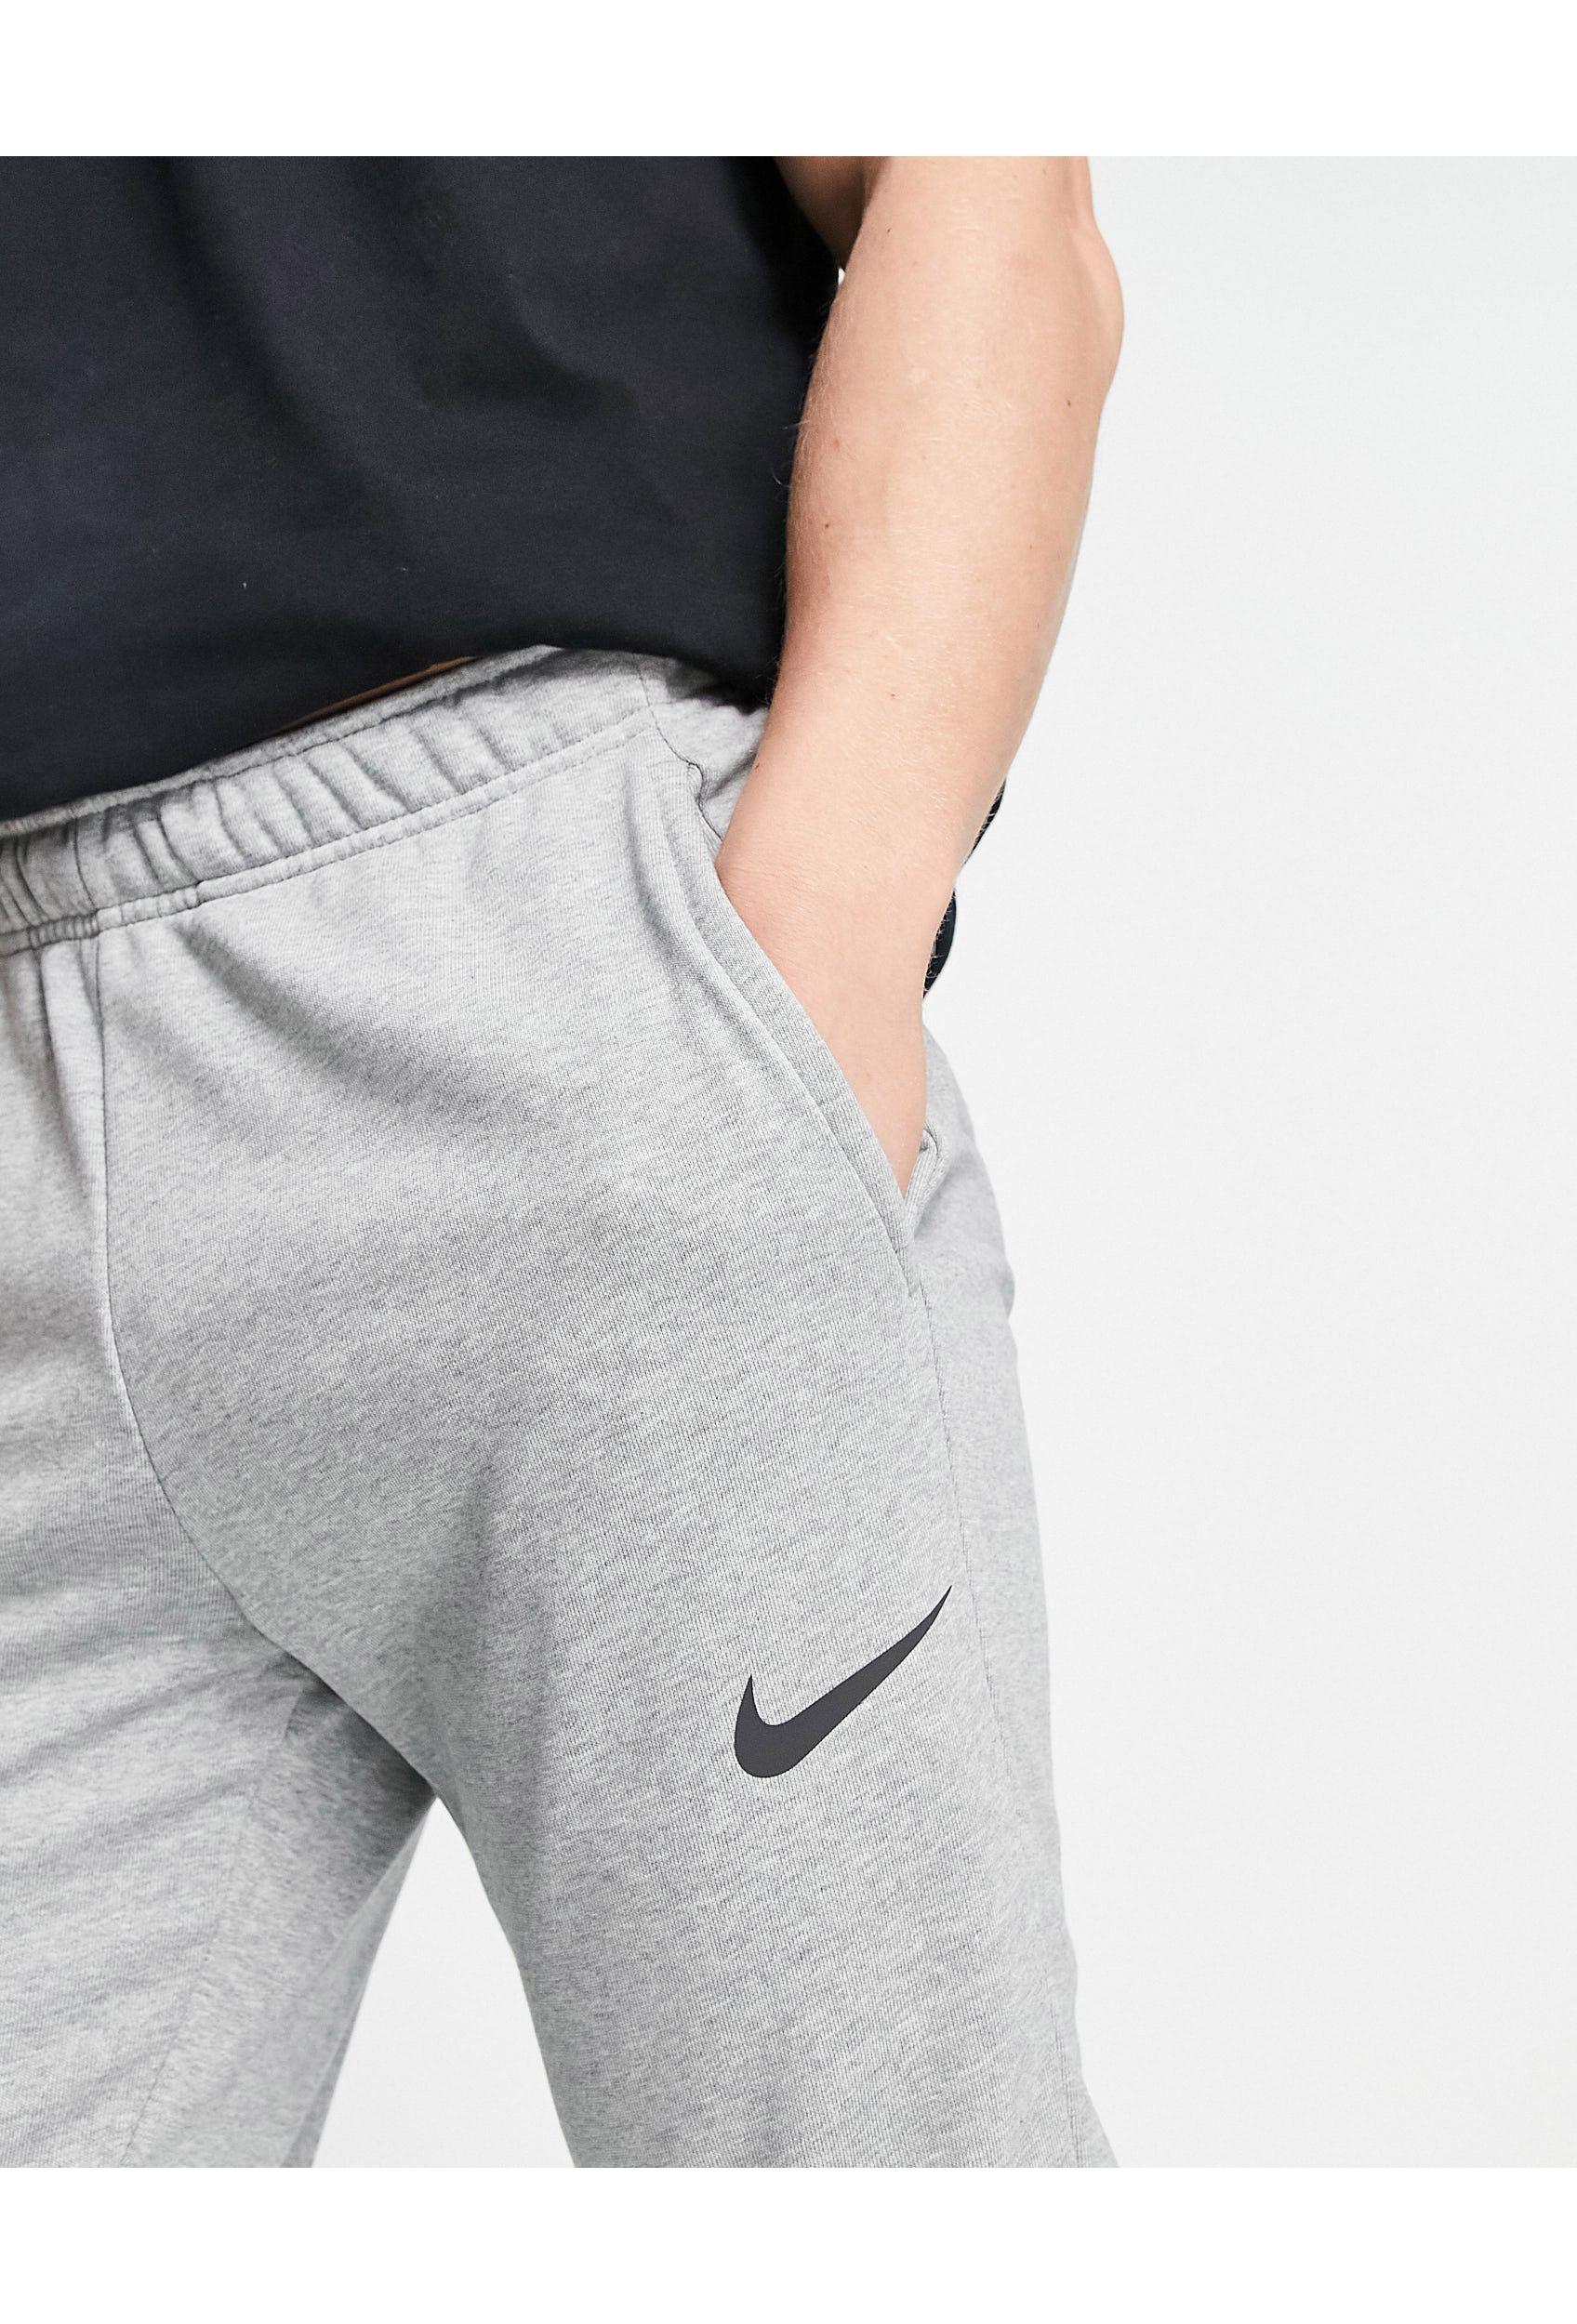 Nike – dri-fit – schmal zulaufende jogginghose in Grau für Herren - Lyst